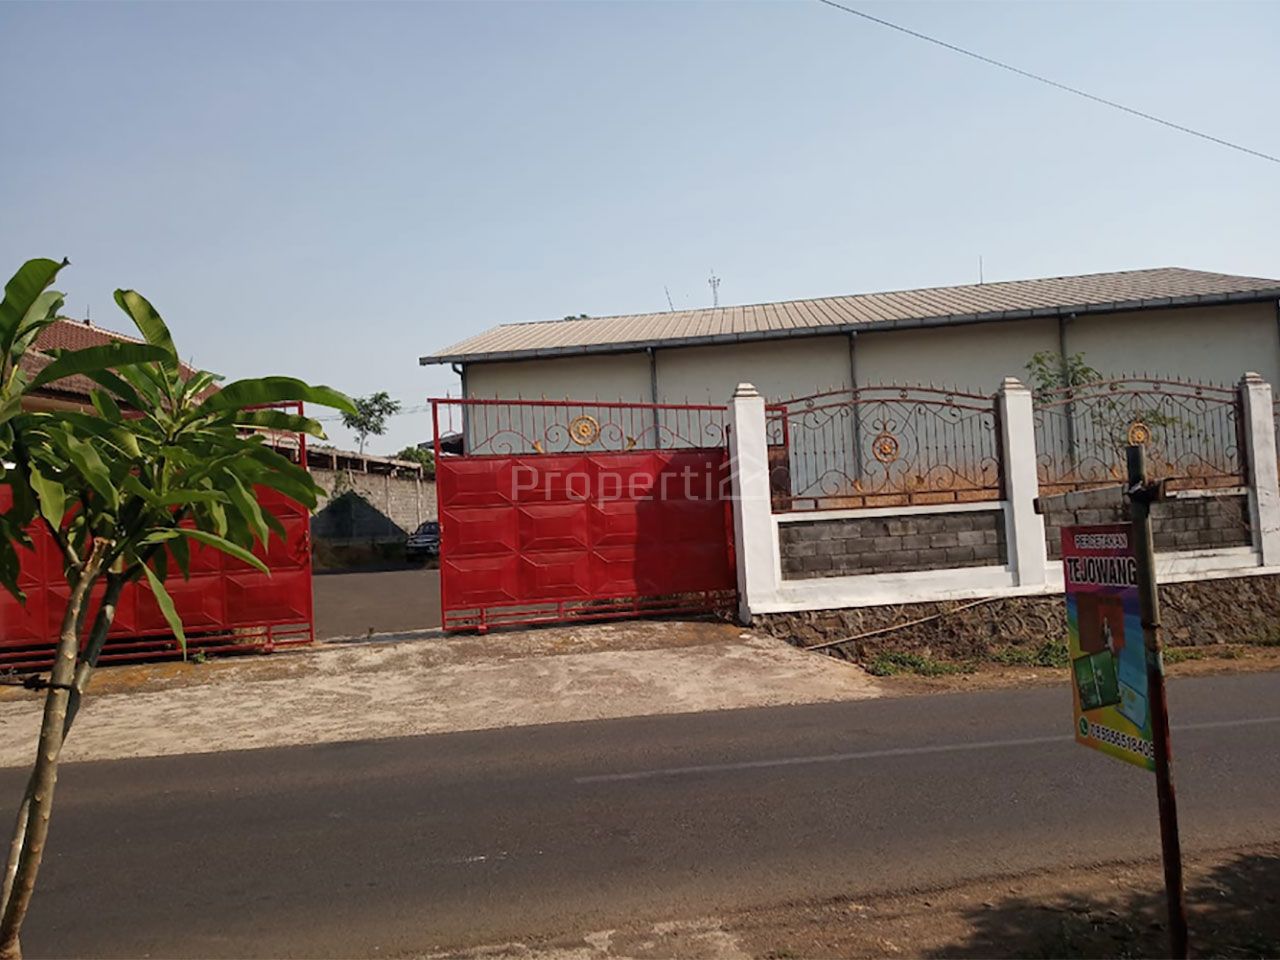 New Relative Warehouse in Tejowangi, Purwosari, Jawa Timur